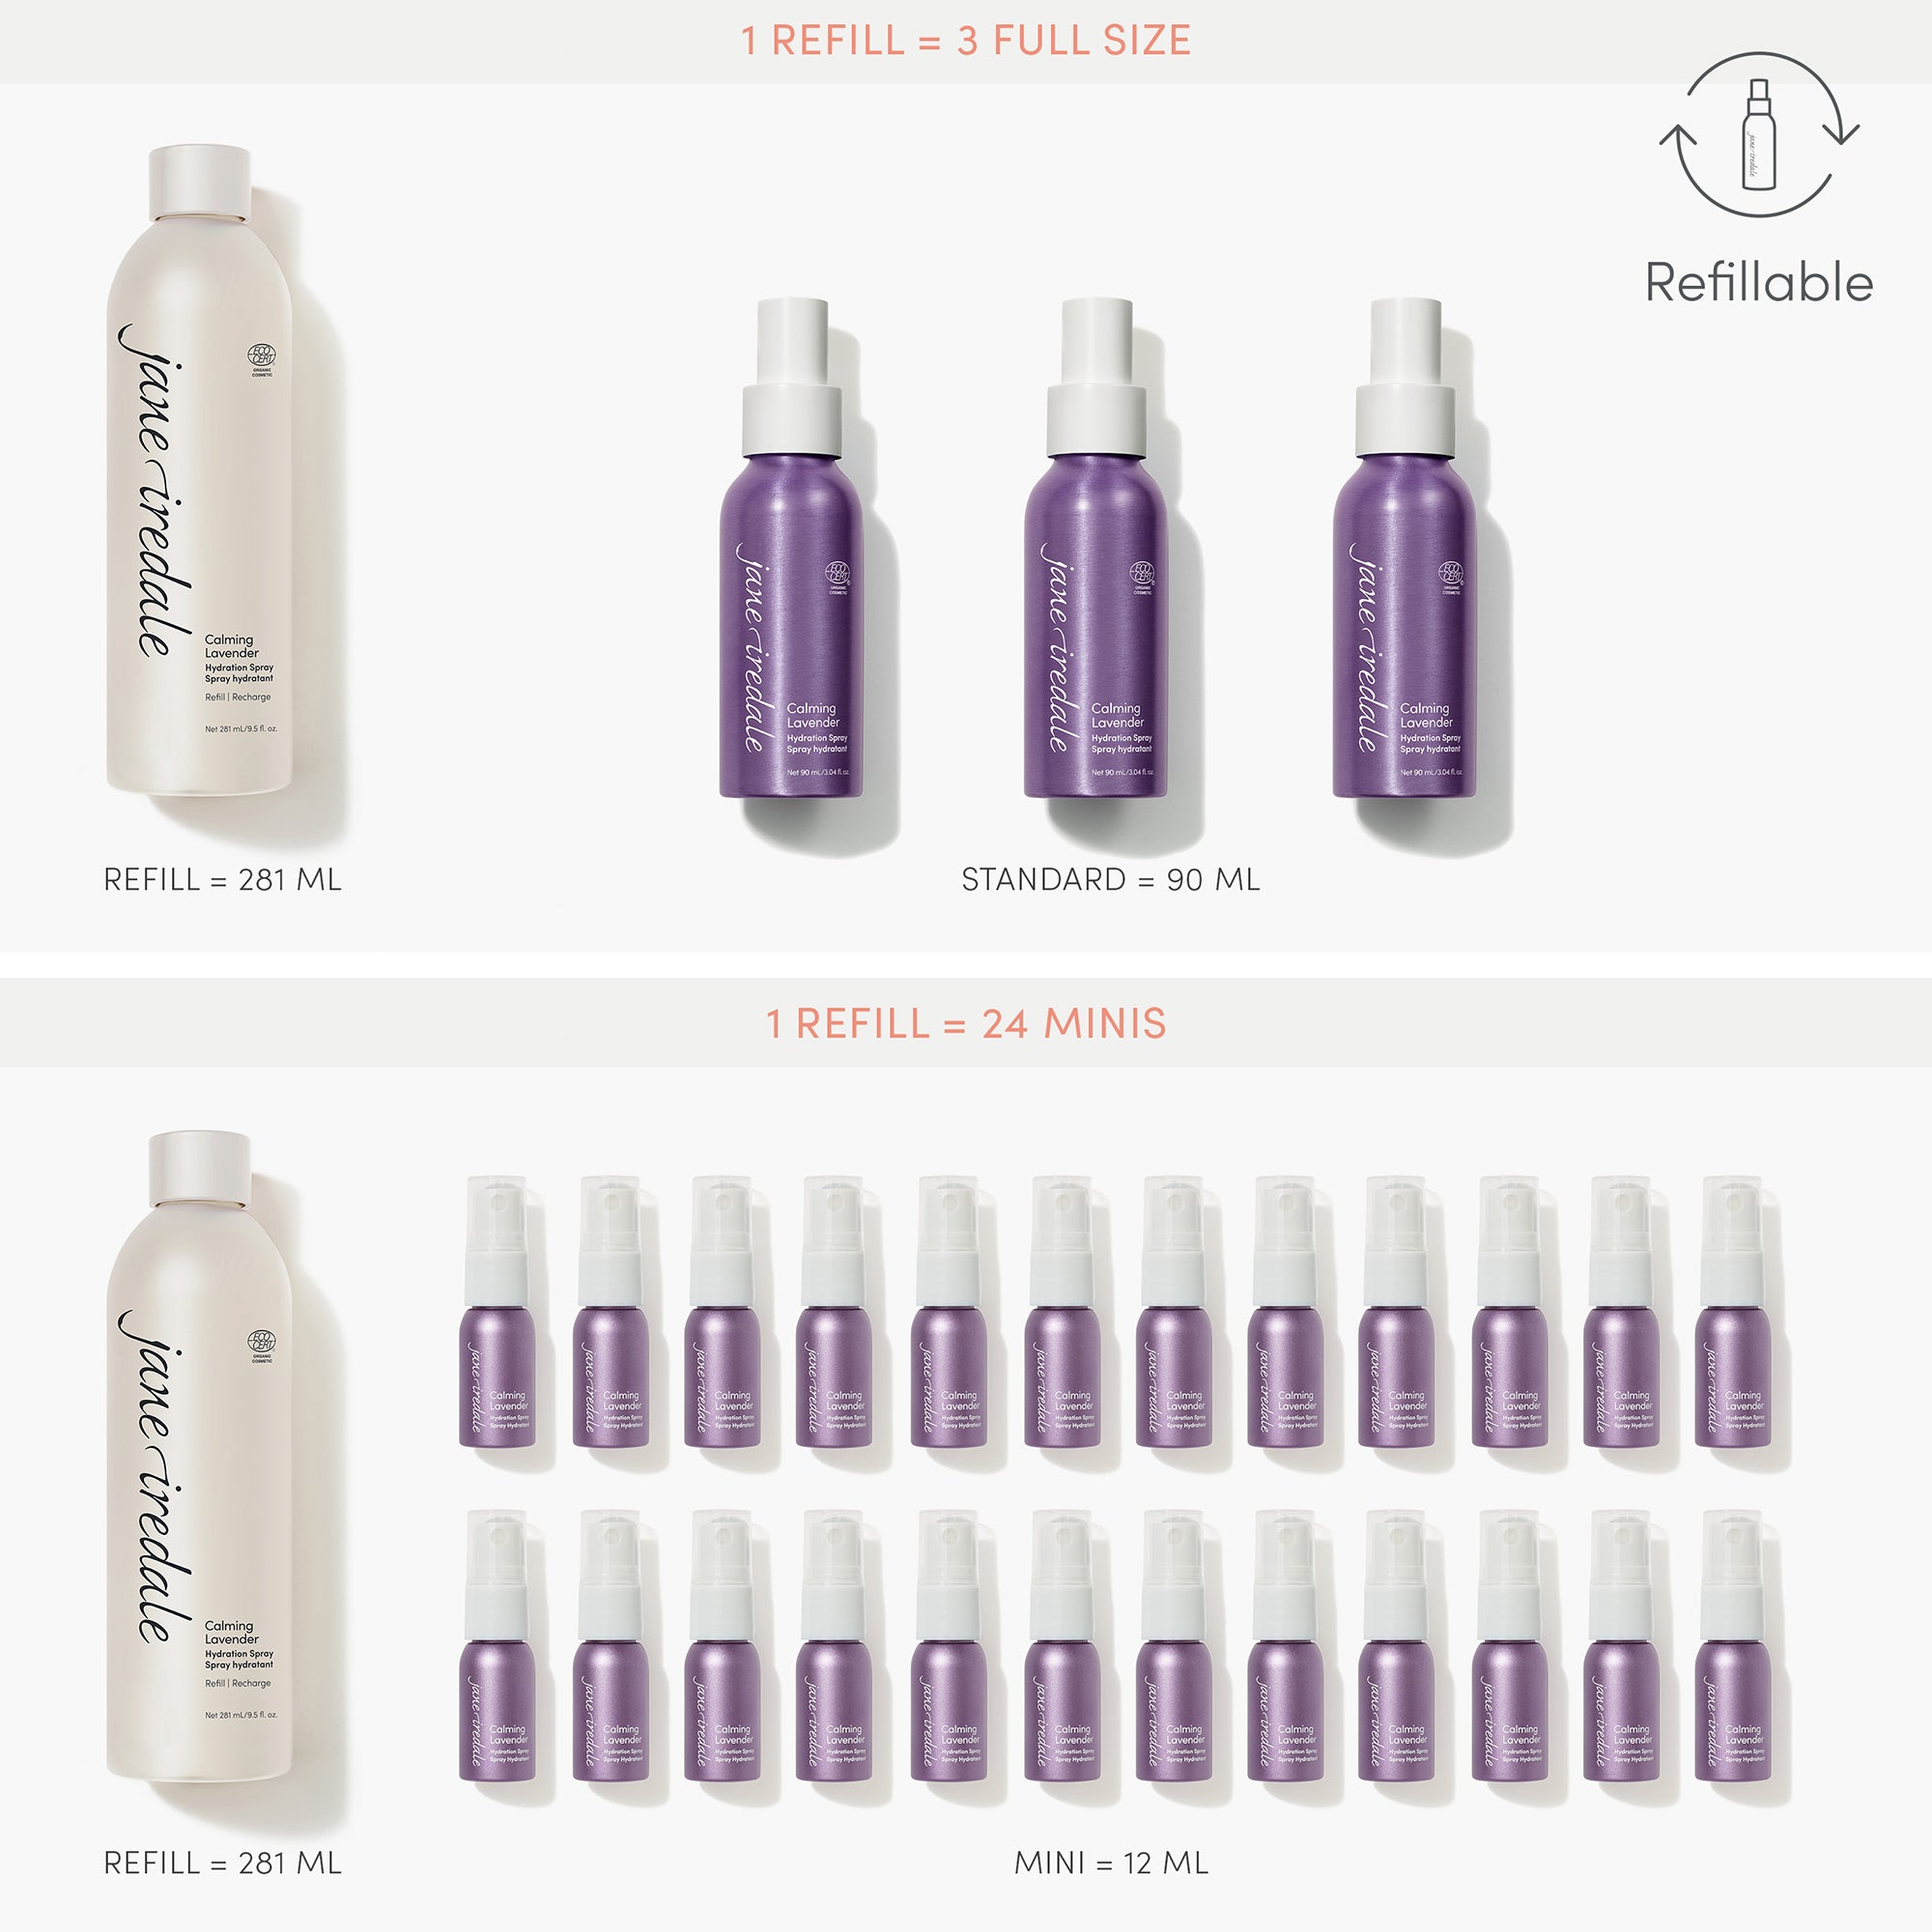 Jane Iredale Lavender Calming Hydration Spray / 3OZ